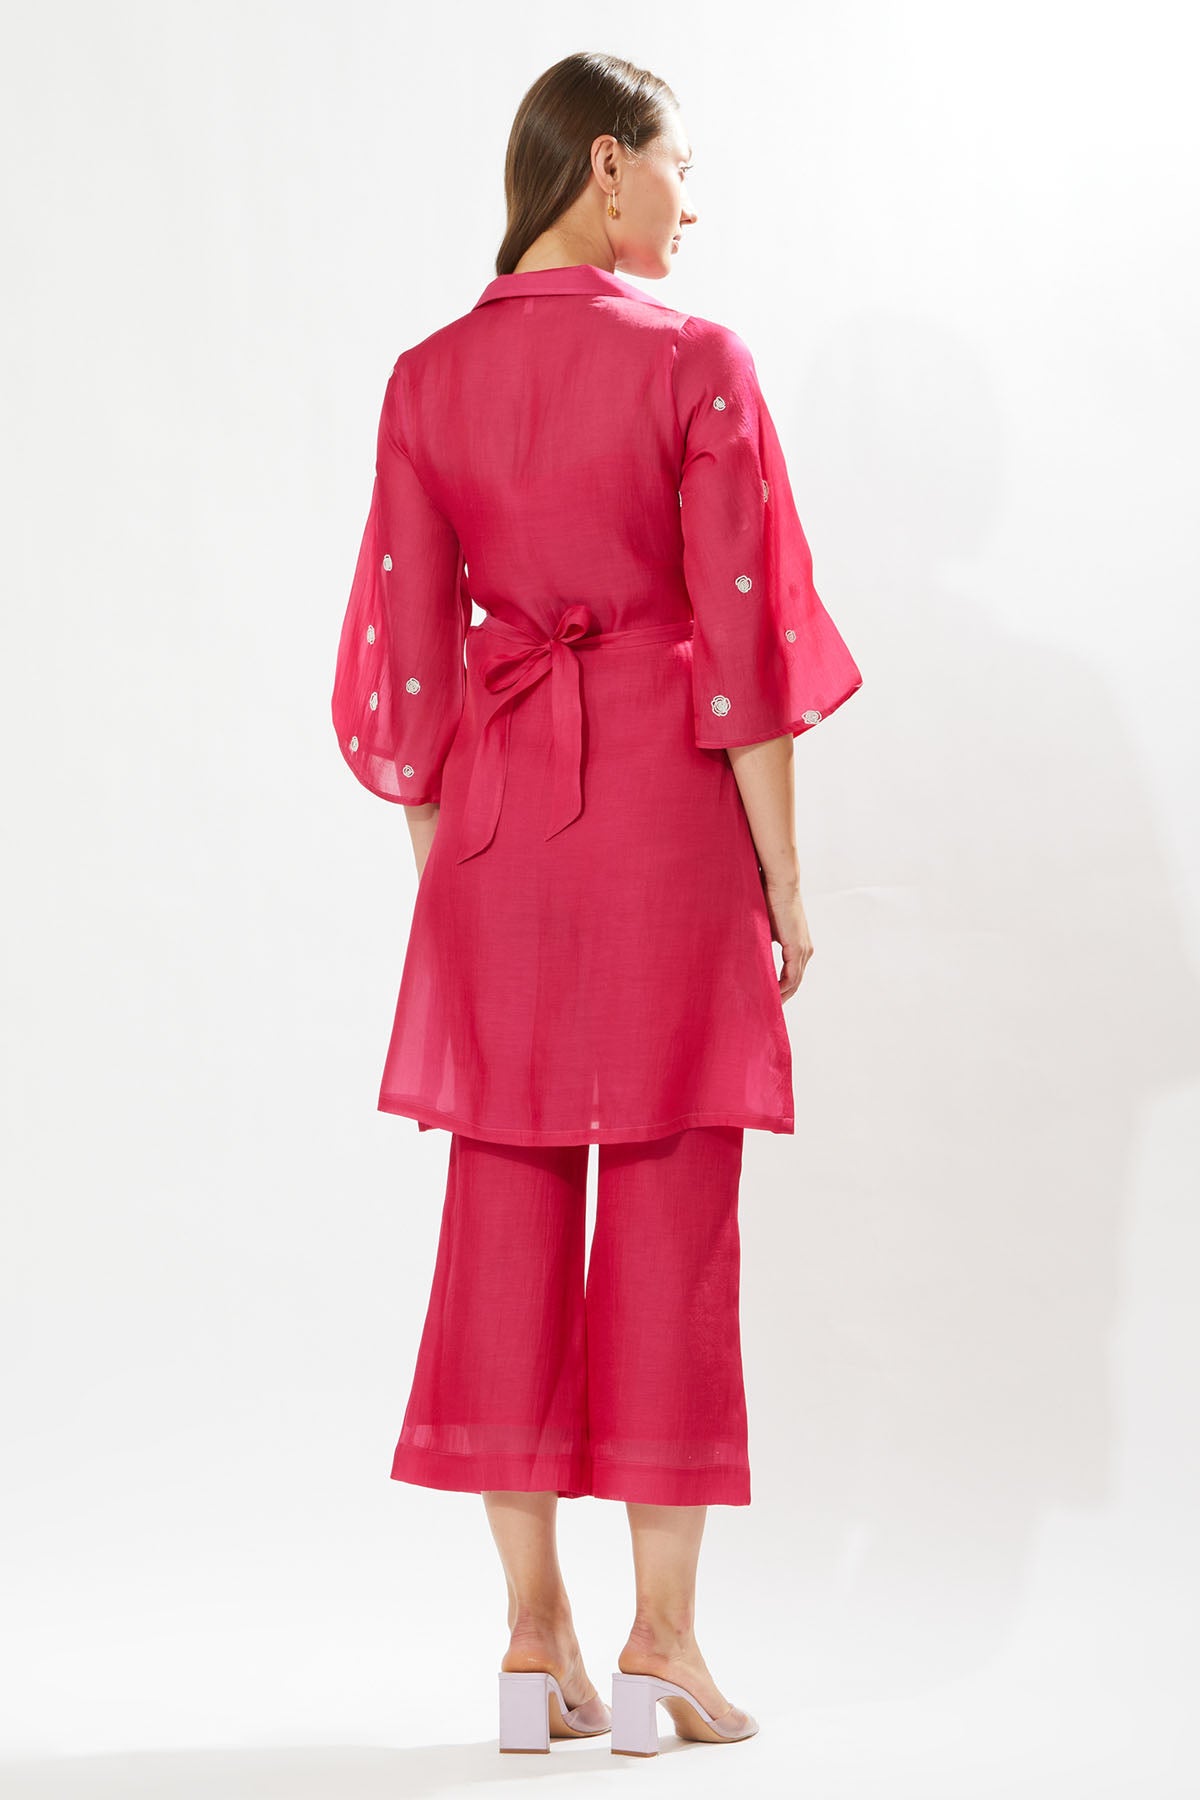 Fuchsia Pink Embroidered Dress